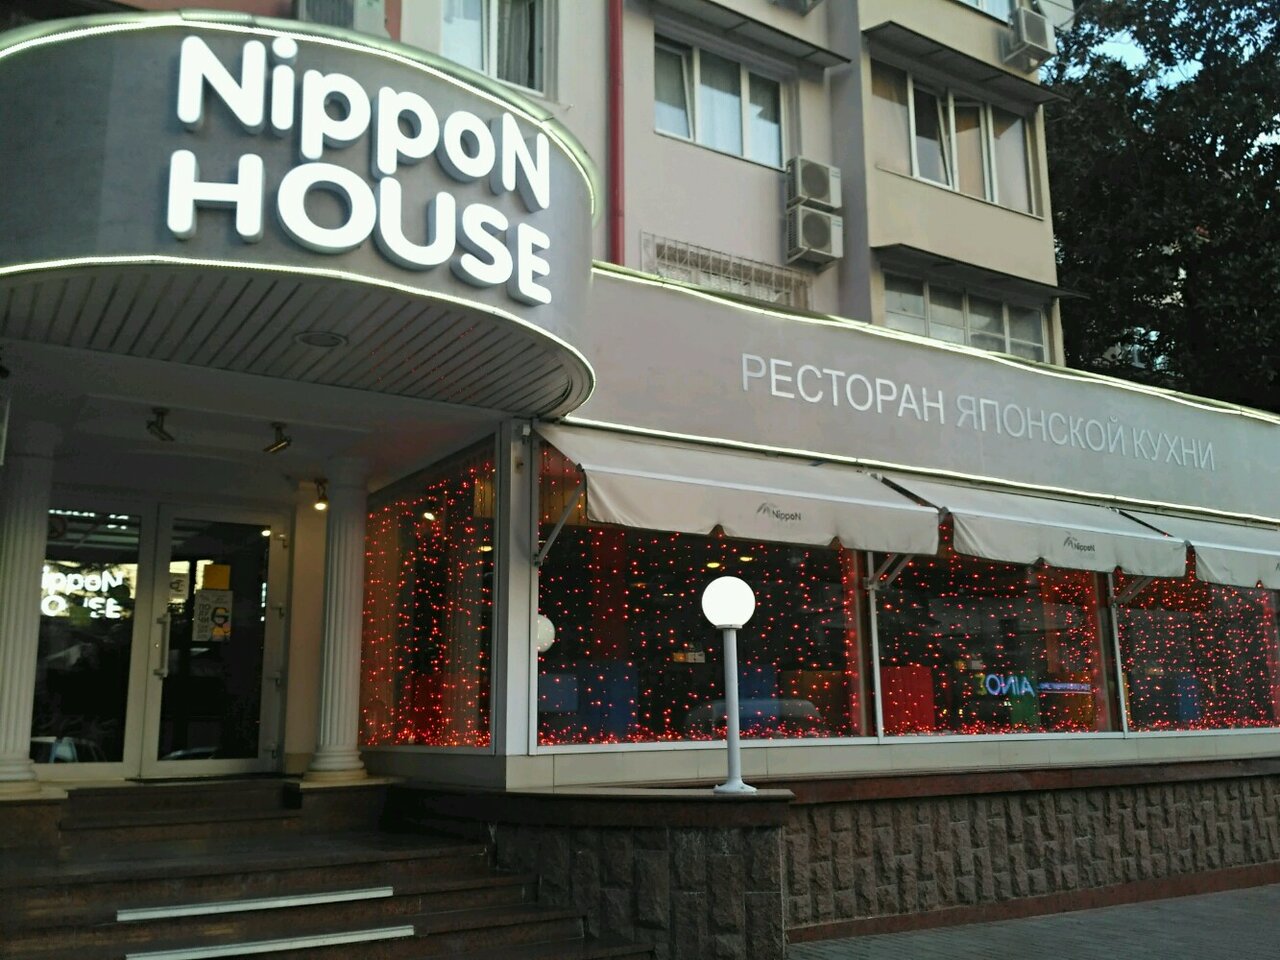 Nippon house